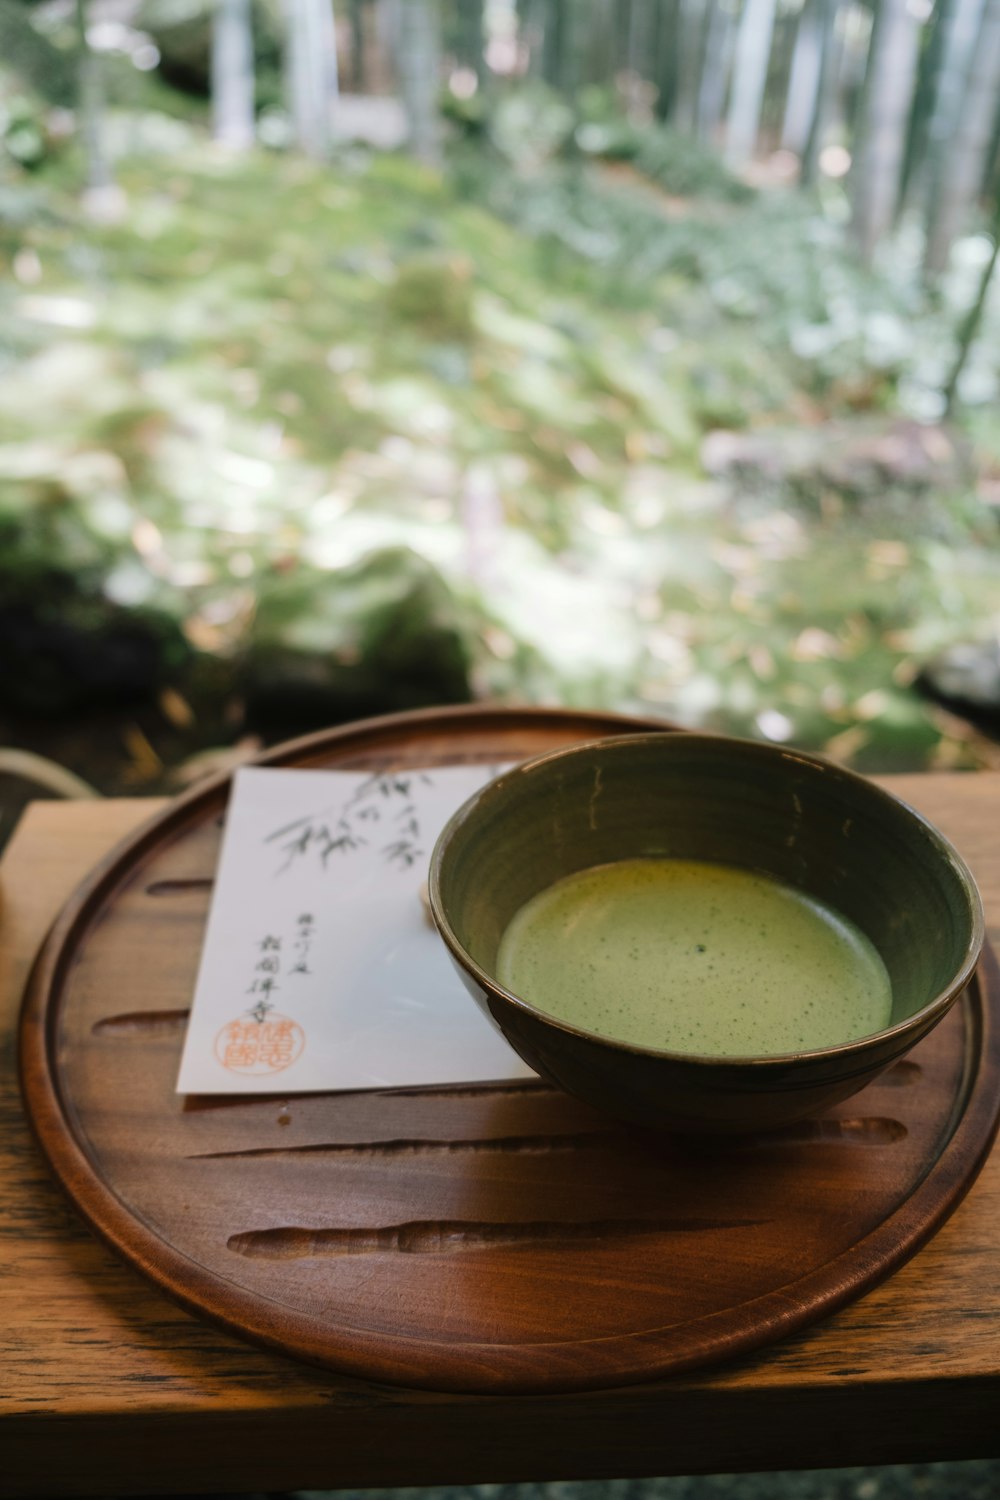 green tea on green ceramic teacup